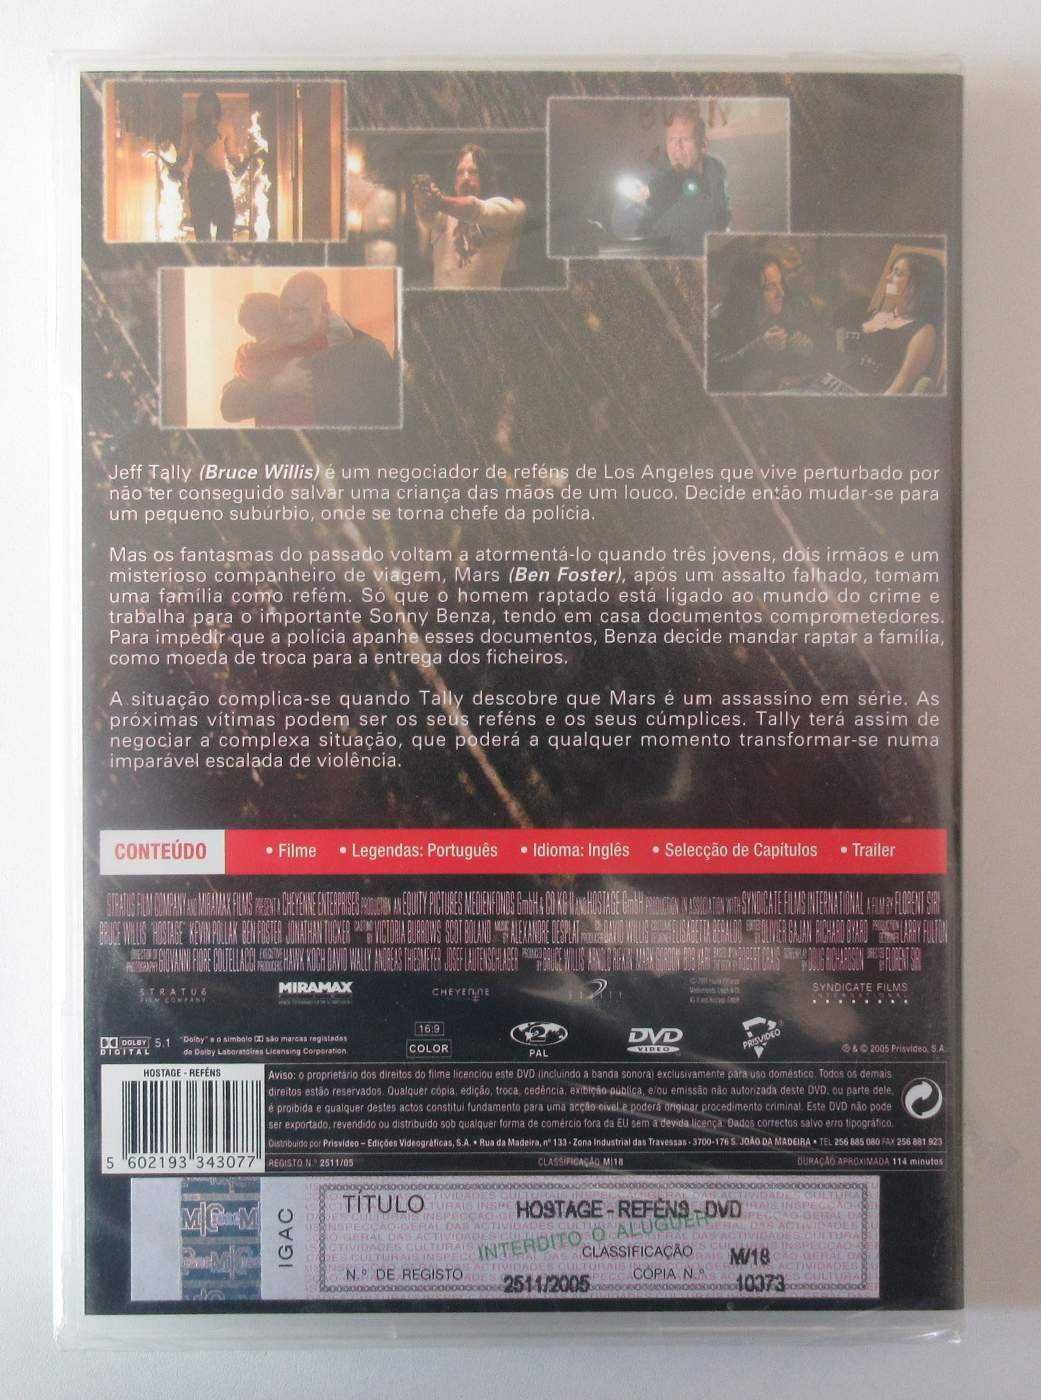 Hostage (Bruce Willis) (DVD NOVO / SELADO)